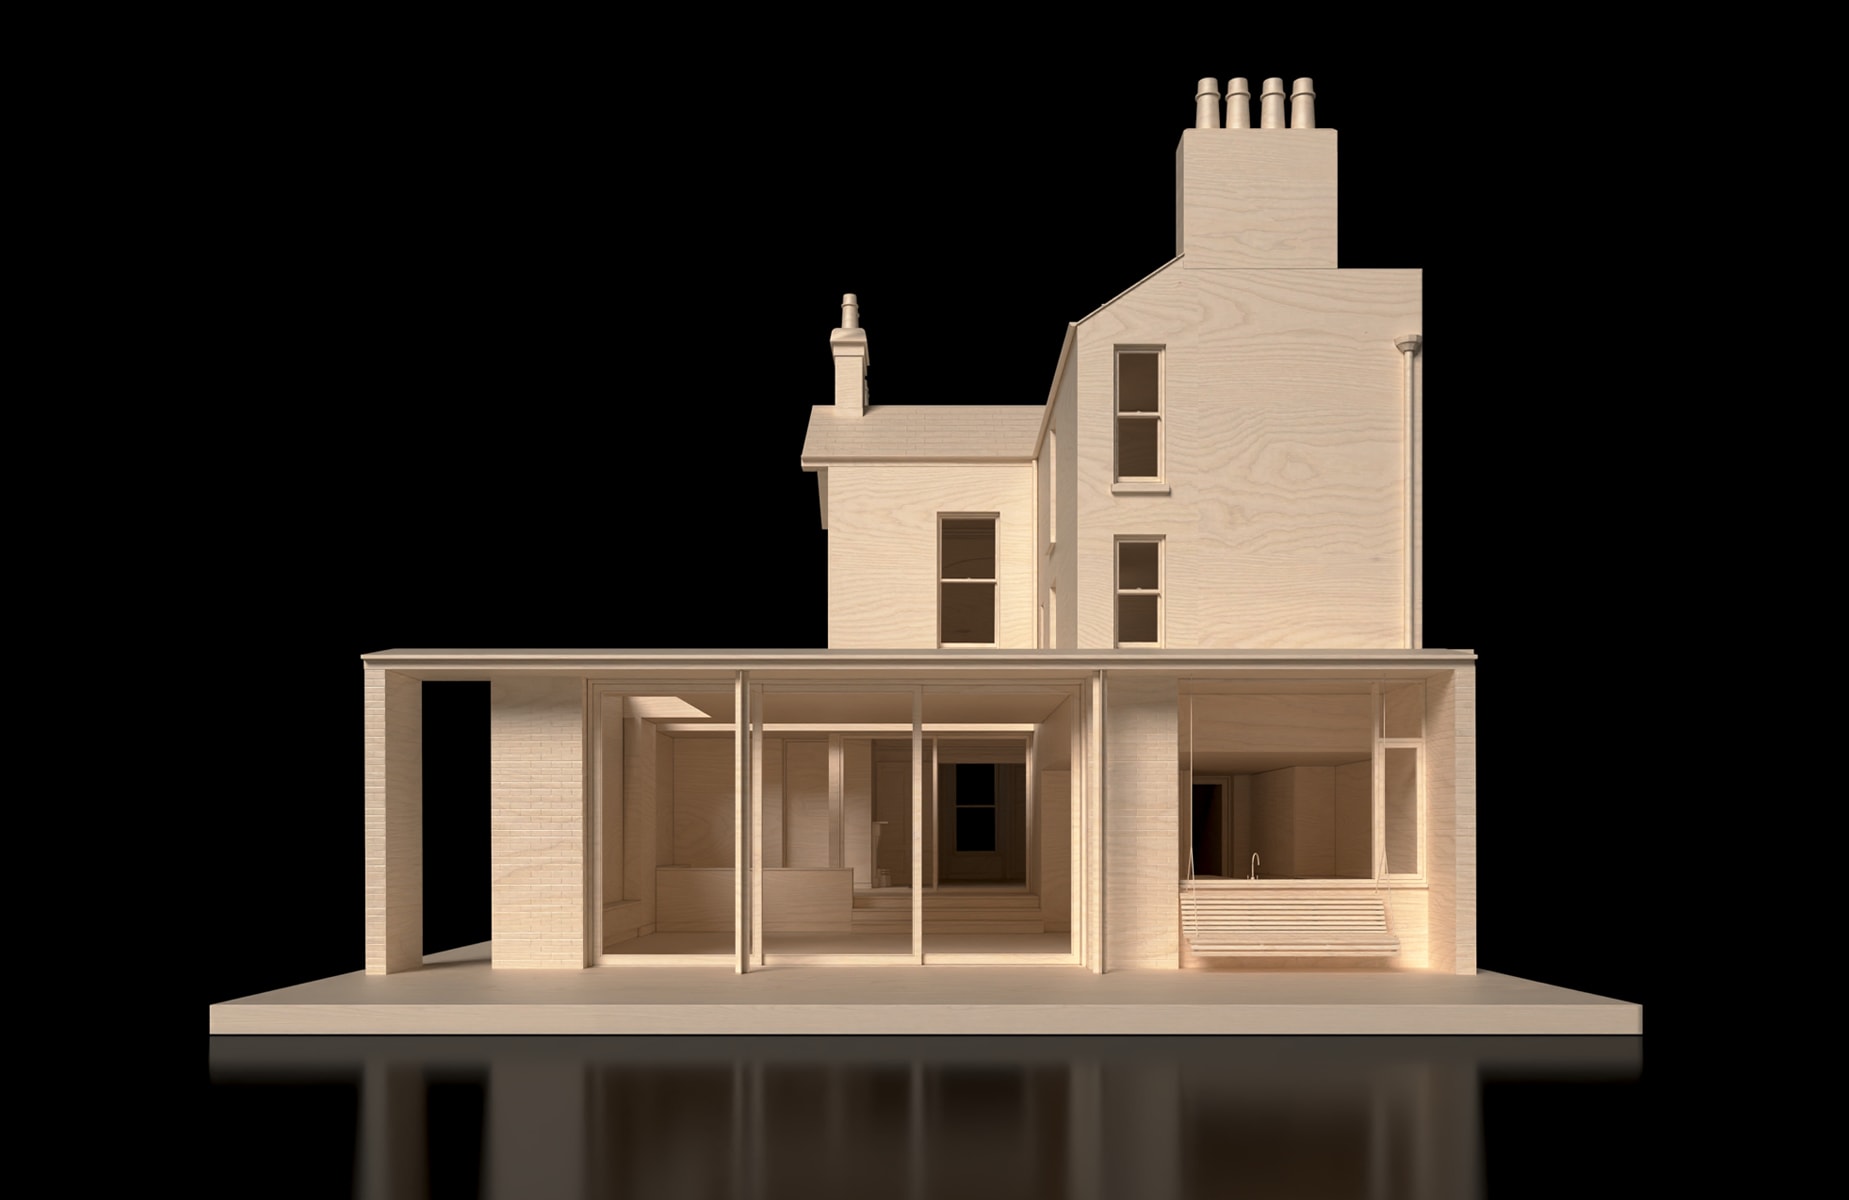 Period house extension, Sandymount, Dublin by David Flynn Architects